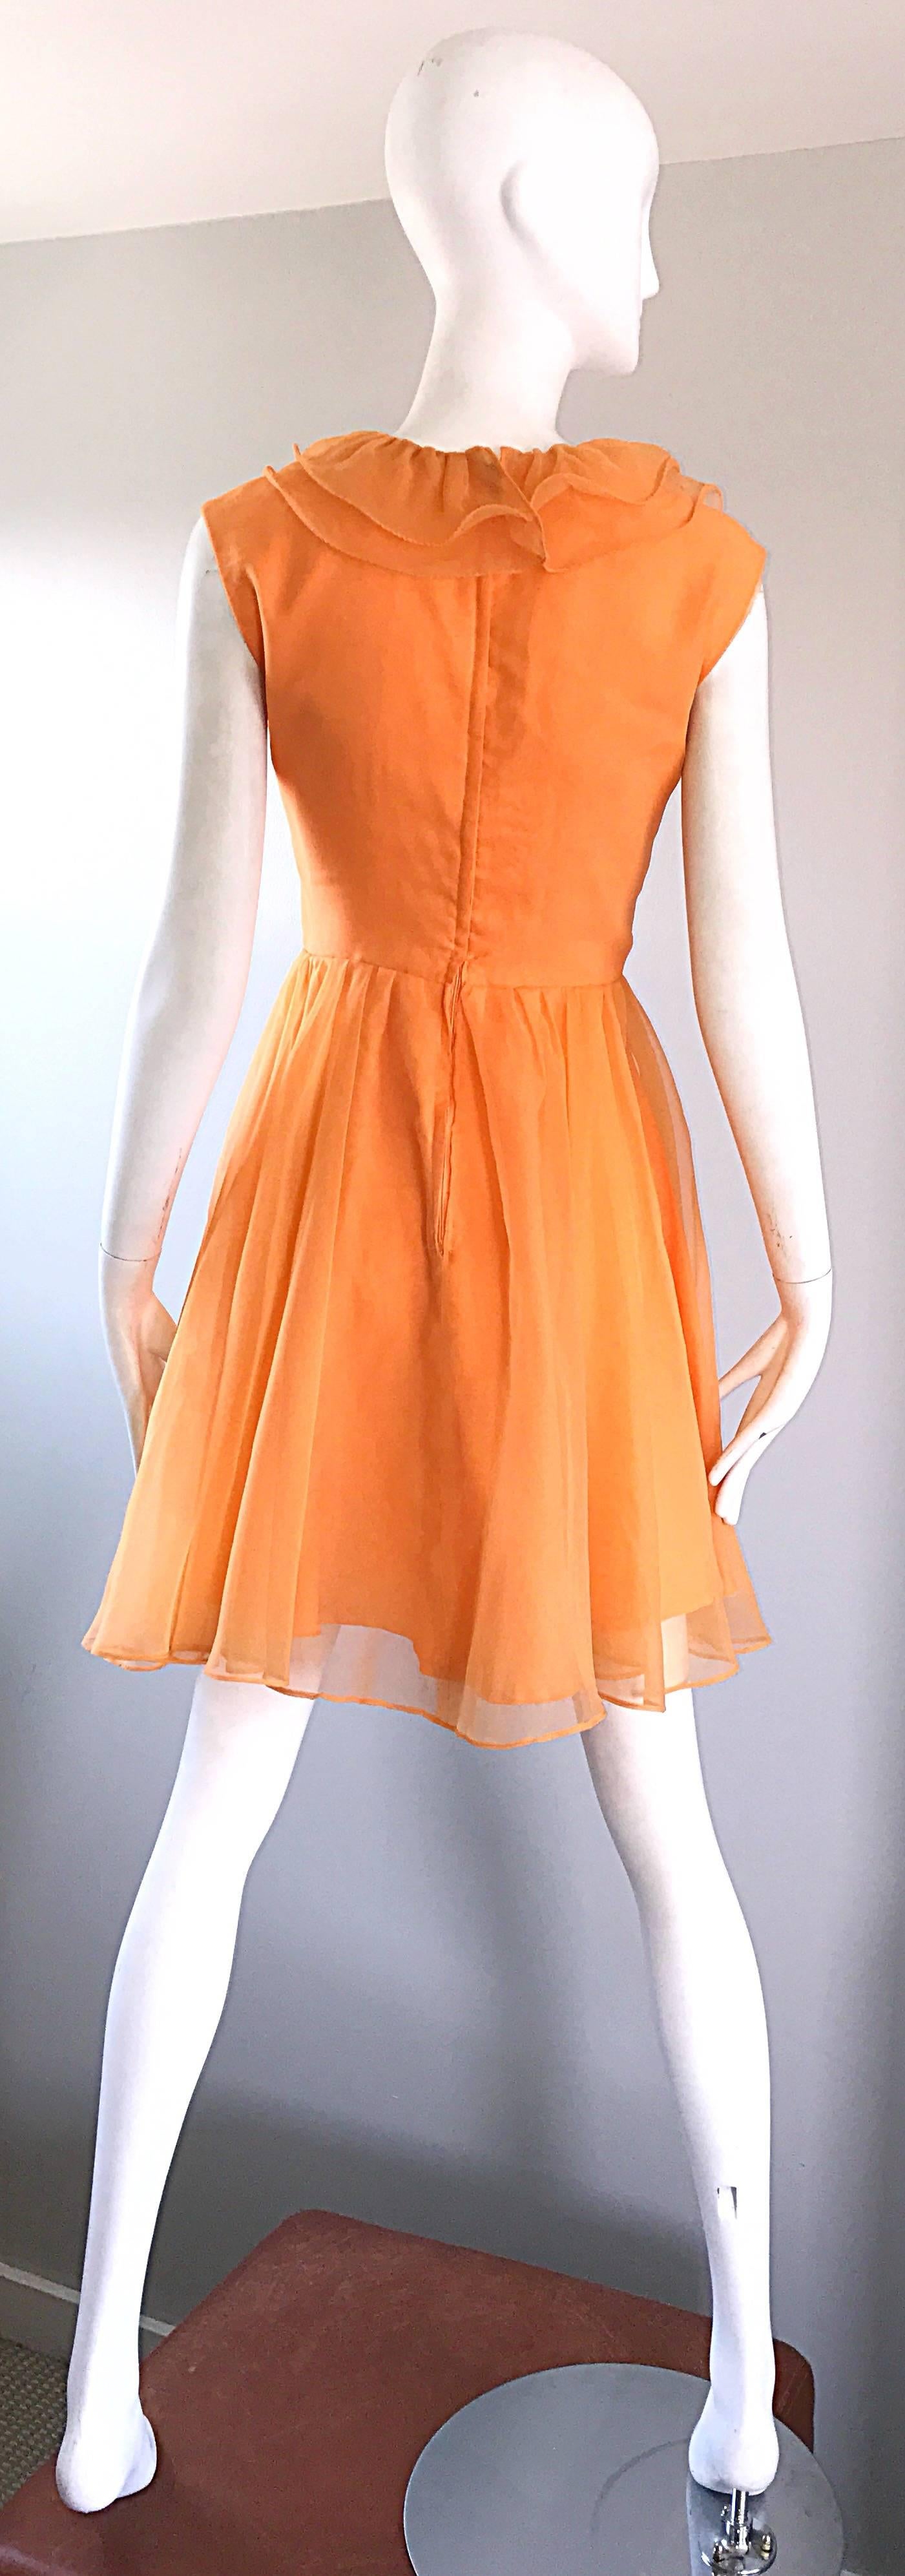 orange vintage dress